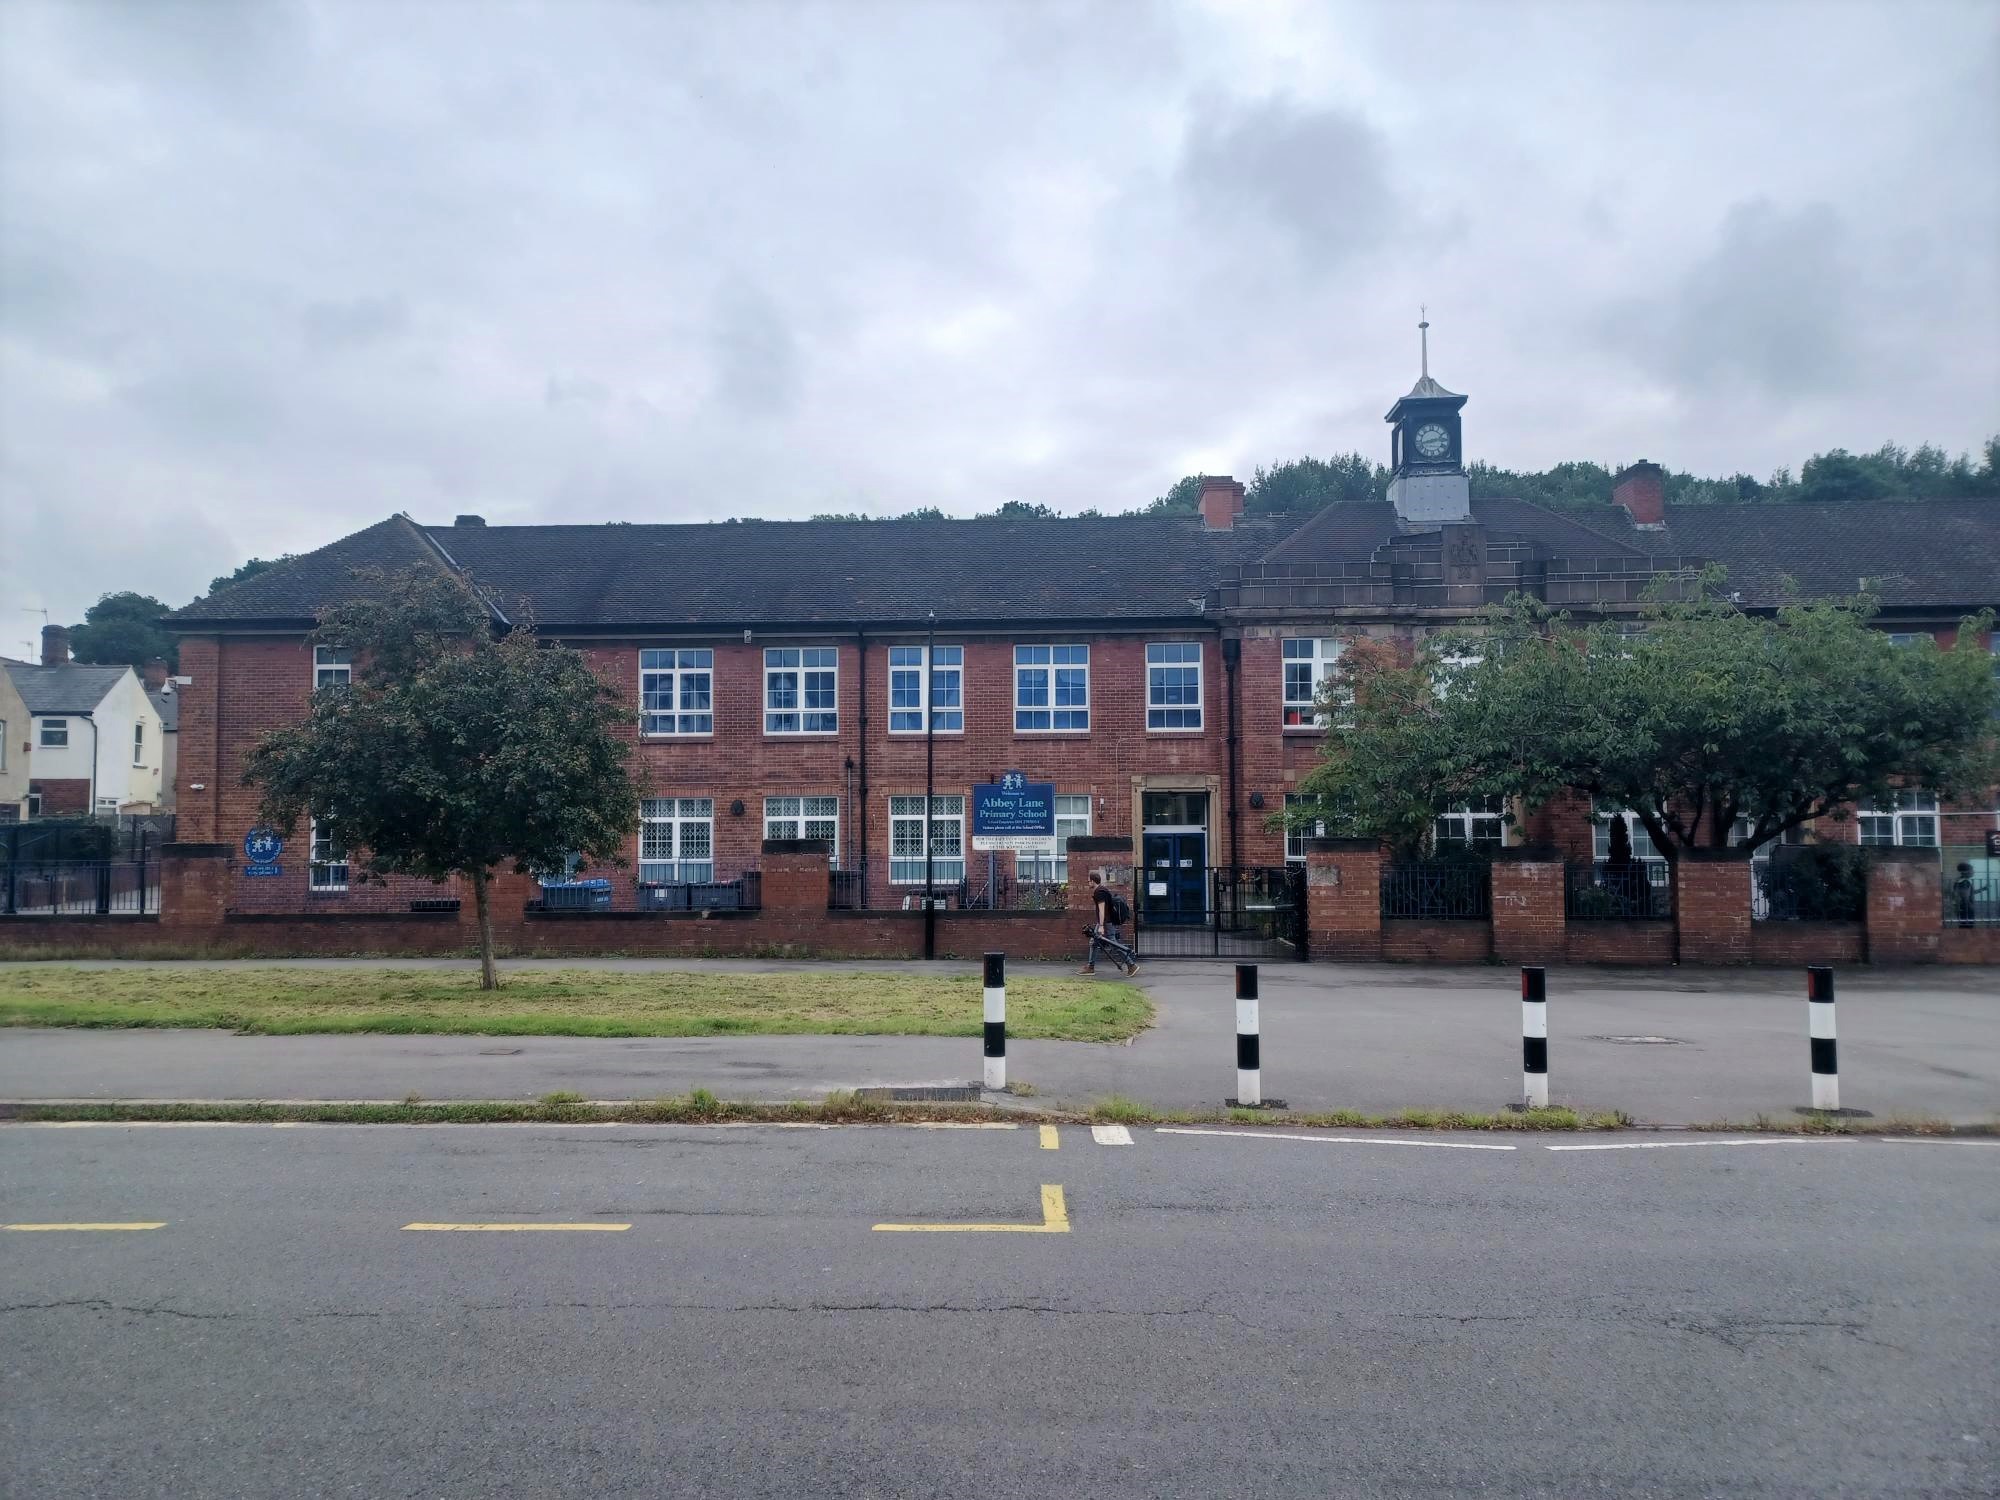 A Google Maps screenshot of Abbey Lane Primary School